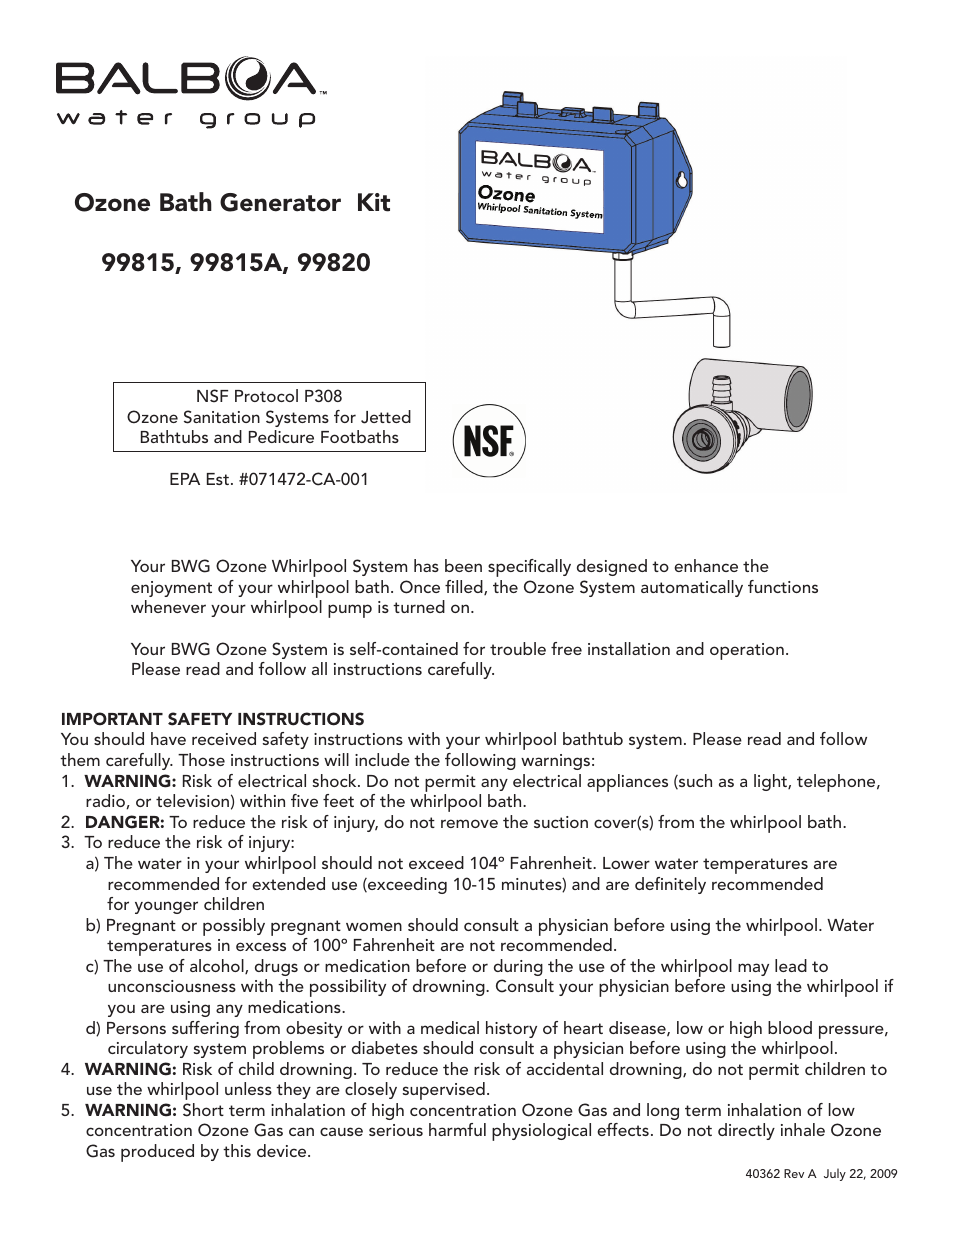 Balboa Water Group Ozone Bath Generator Kit 99815 User